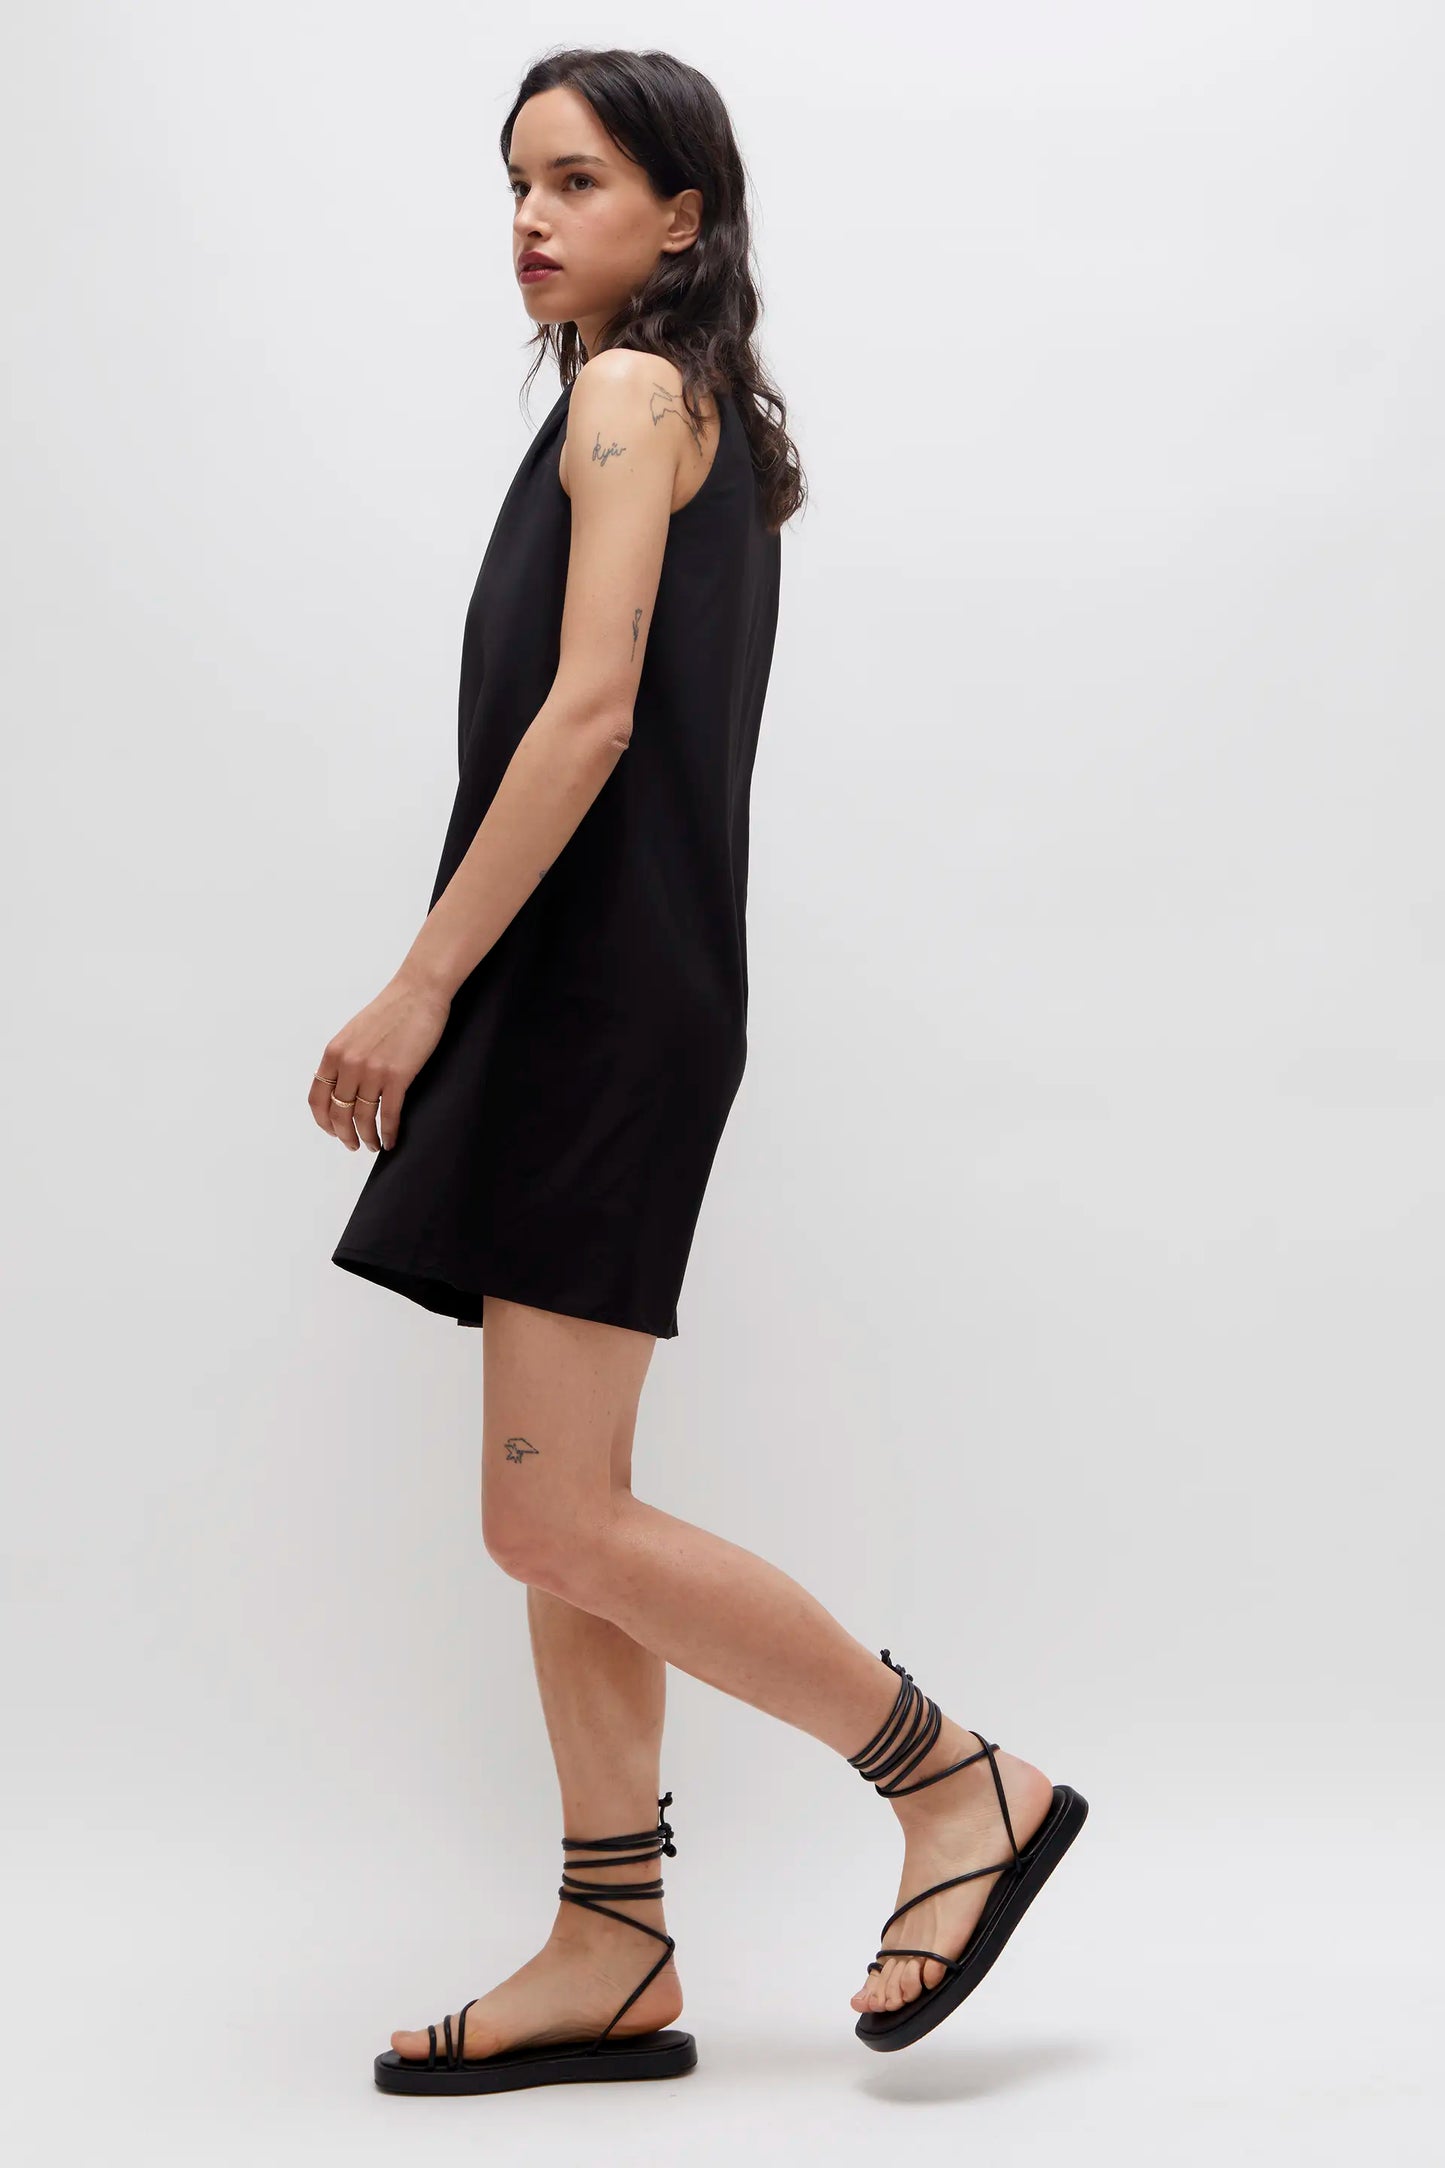 Short black satin dress with straps